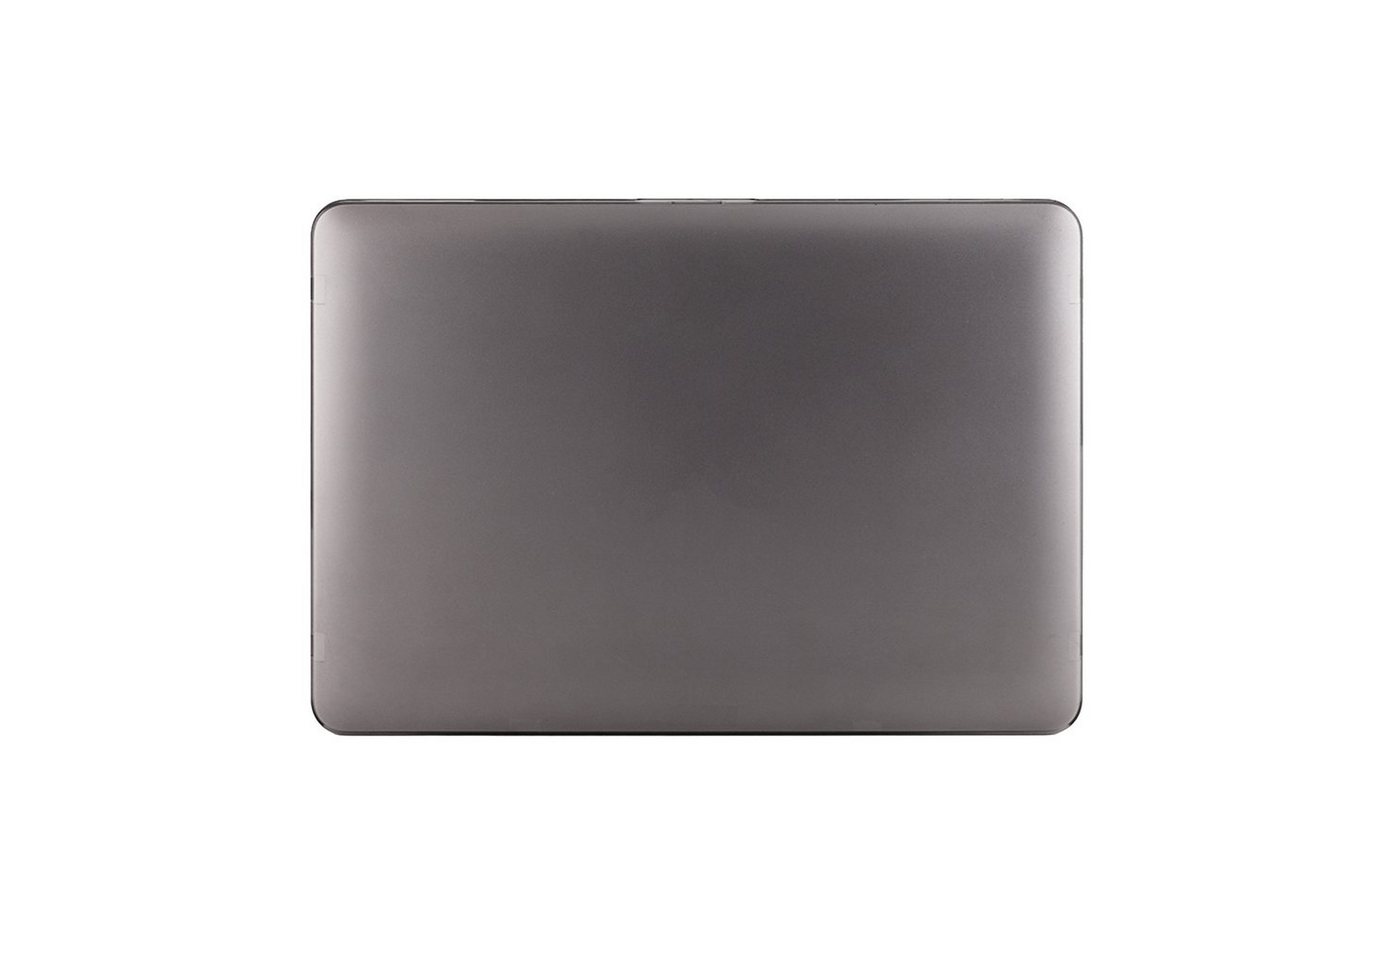 KMP Creative Lifesytle Product Laptop-Hülle Schutzhülle für 15 MacBook Pro Retina Anthracite 38,1 cm (15 Zoll), Hülle, Tasche, leicht, Schutz, Schale, dünn" von KMP Creative Lifesytle Product